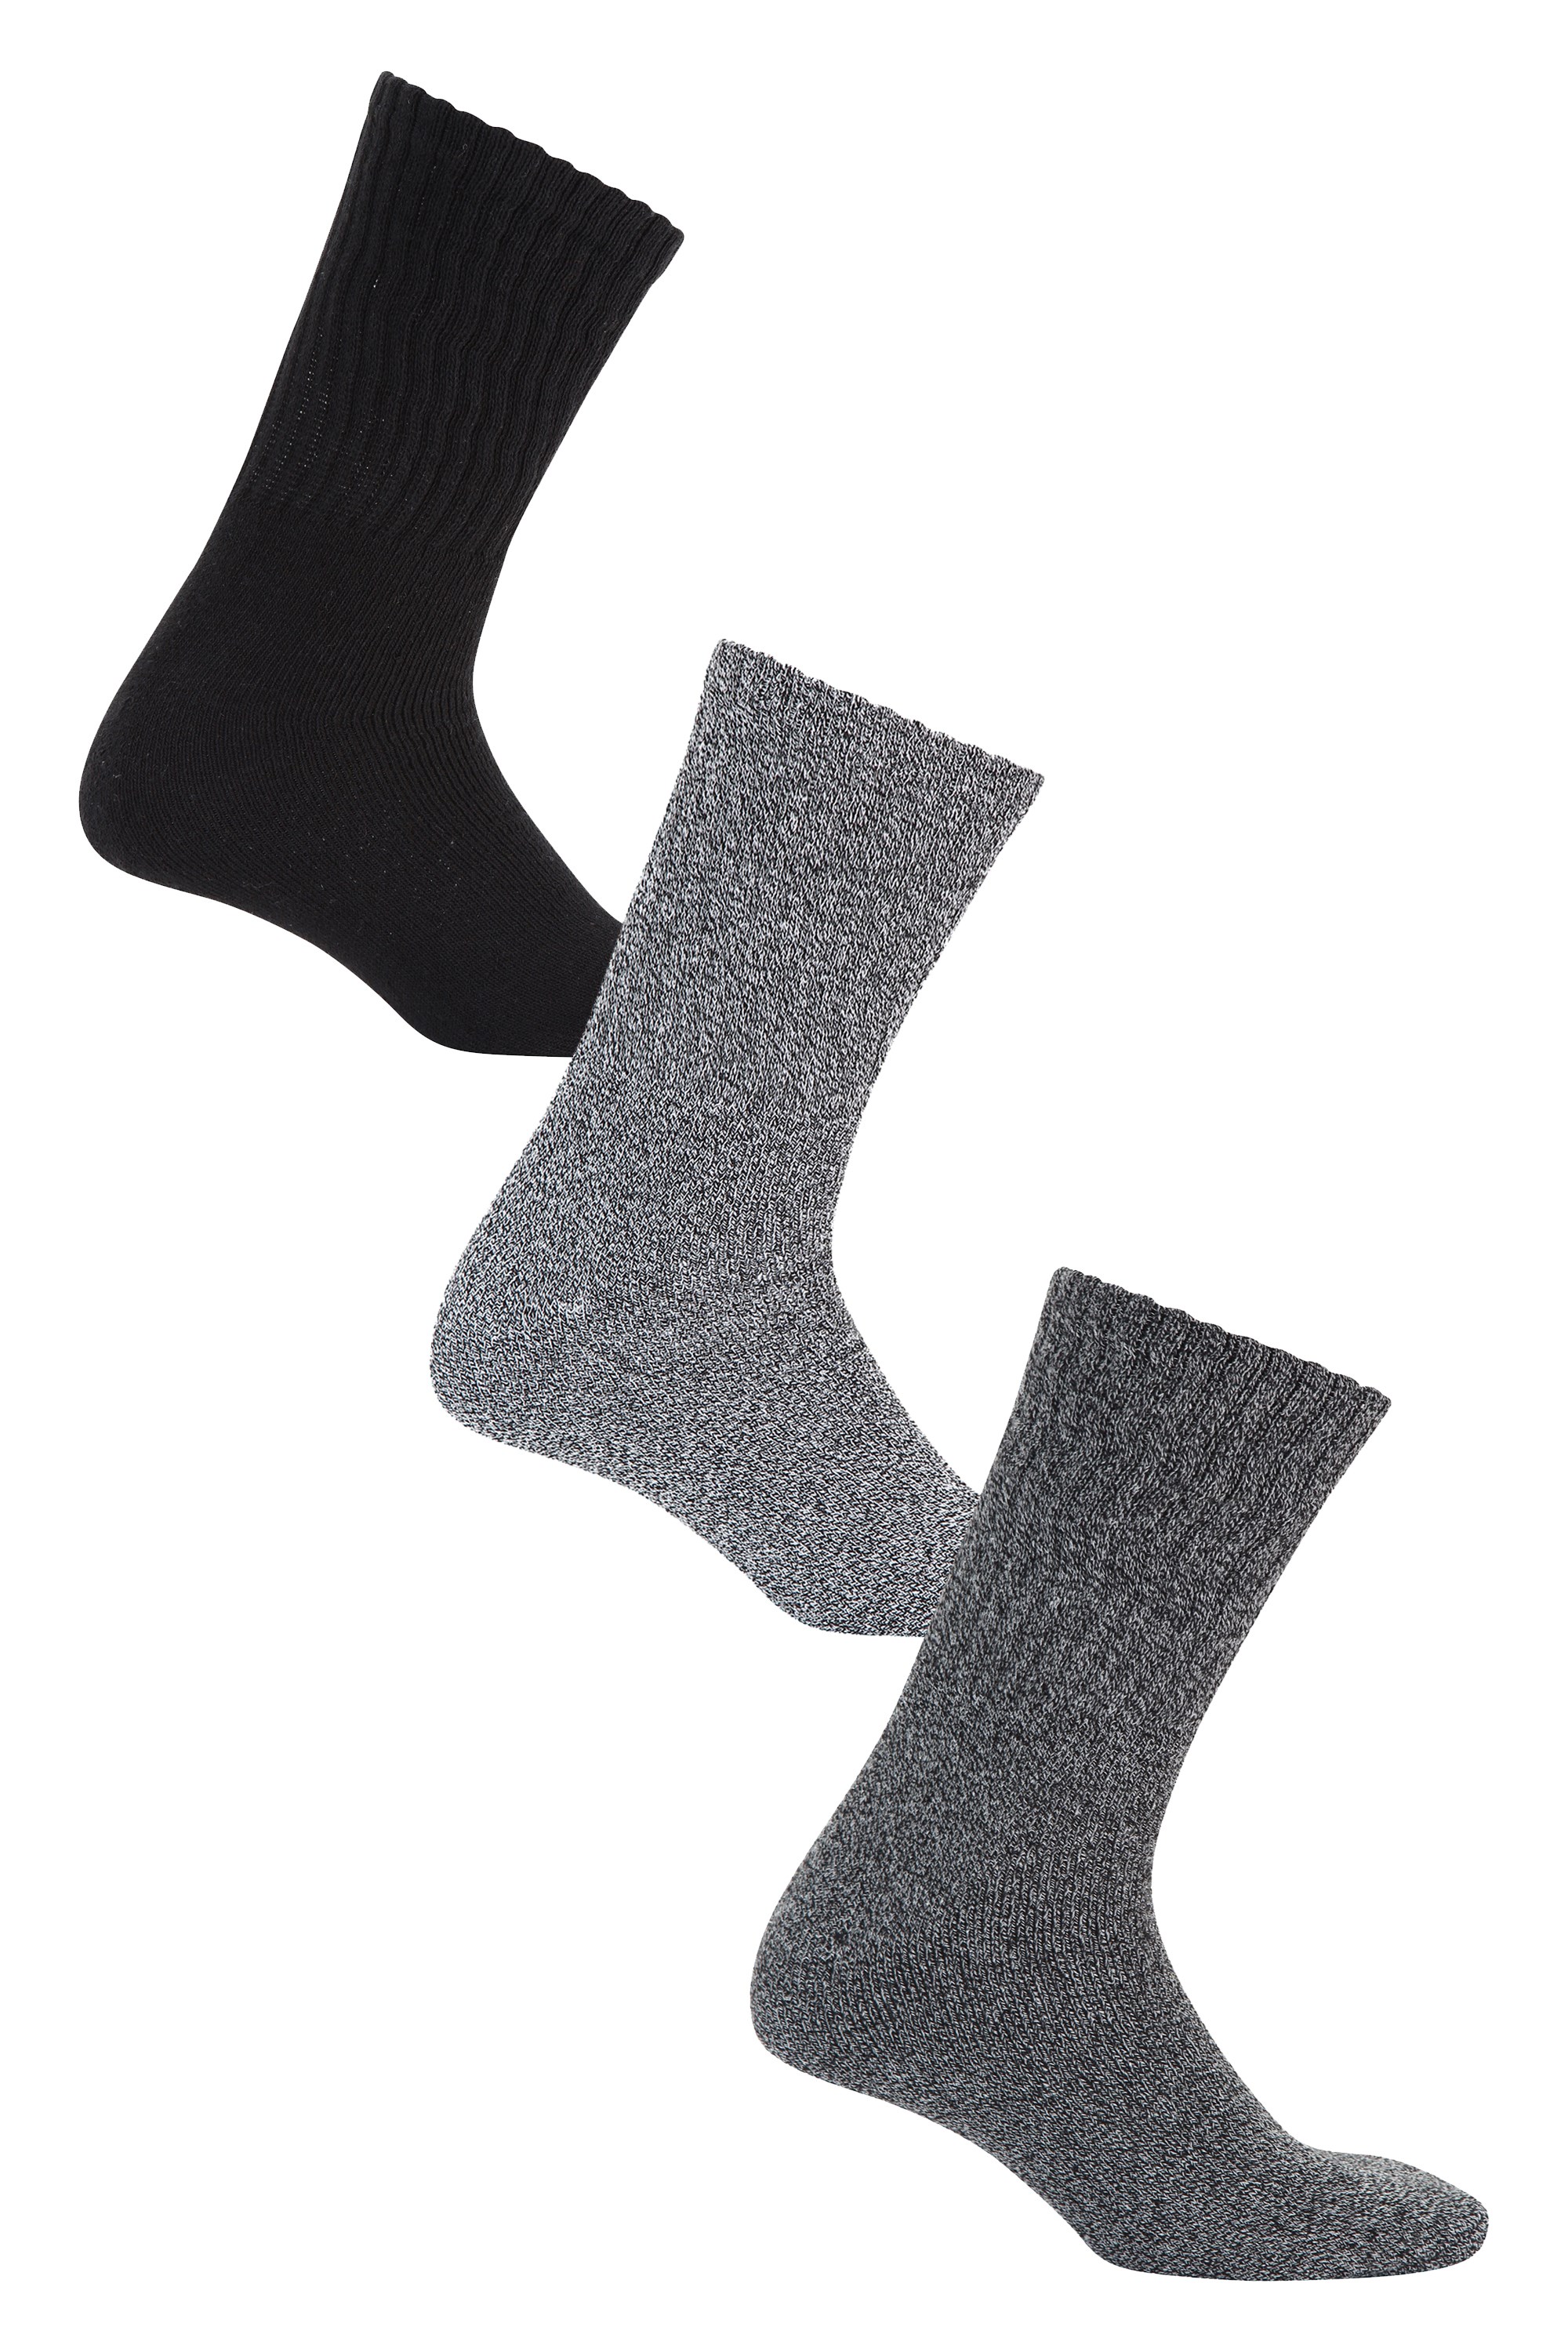 Outdoor Mens Socks 3-pack - Black